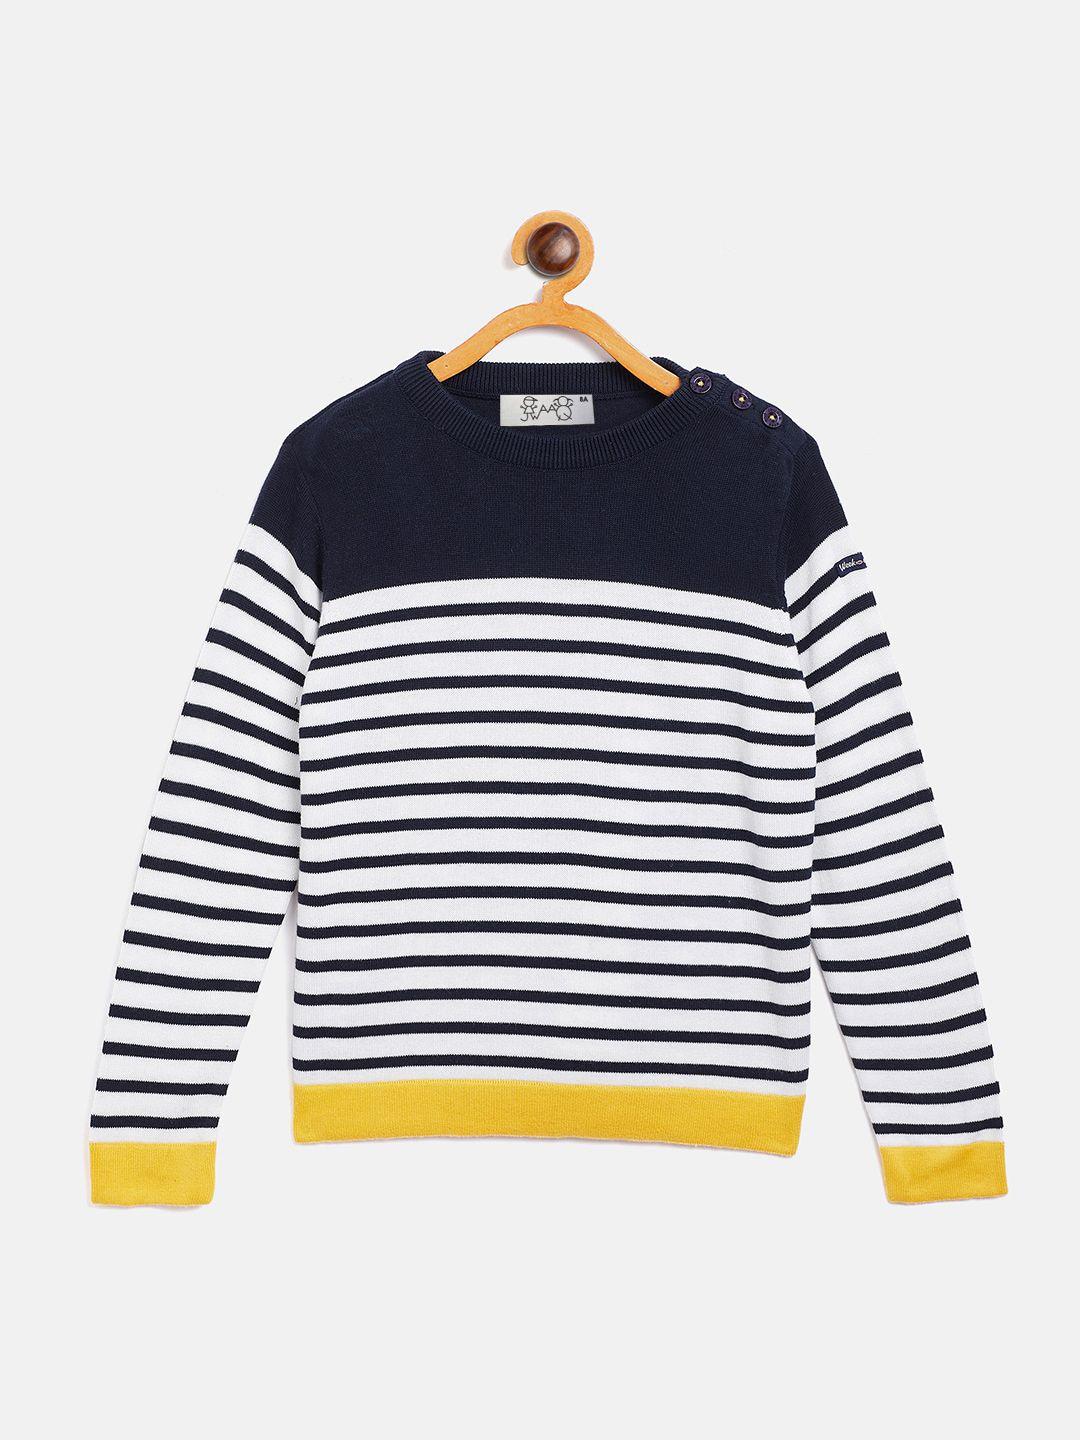 jwaaq unisex kids white & navy blue striped pullover